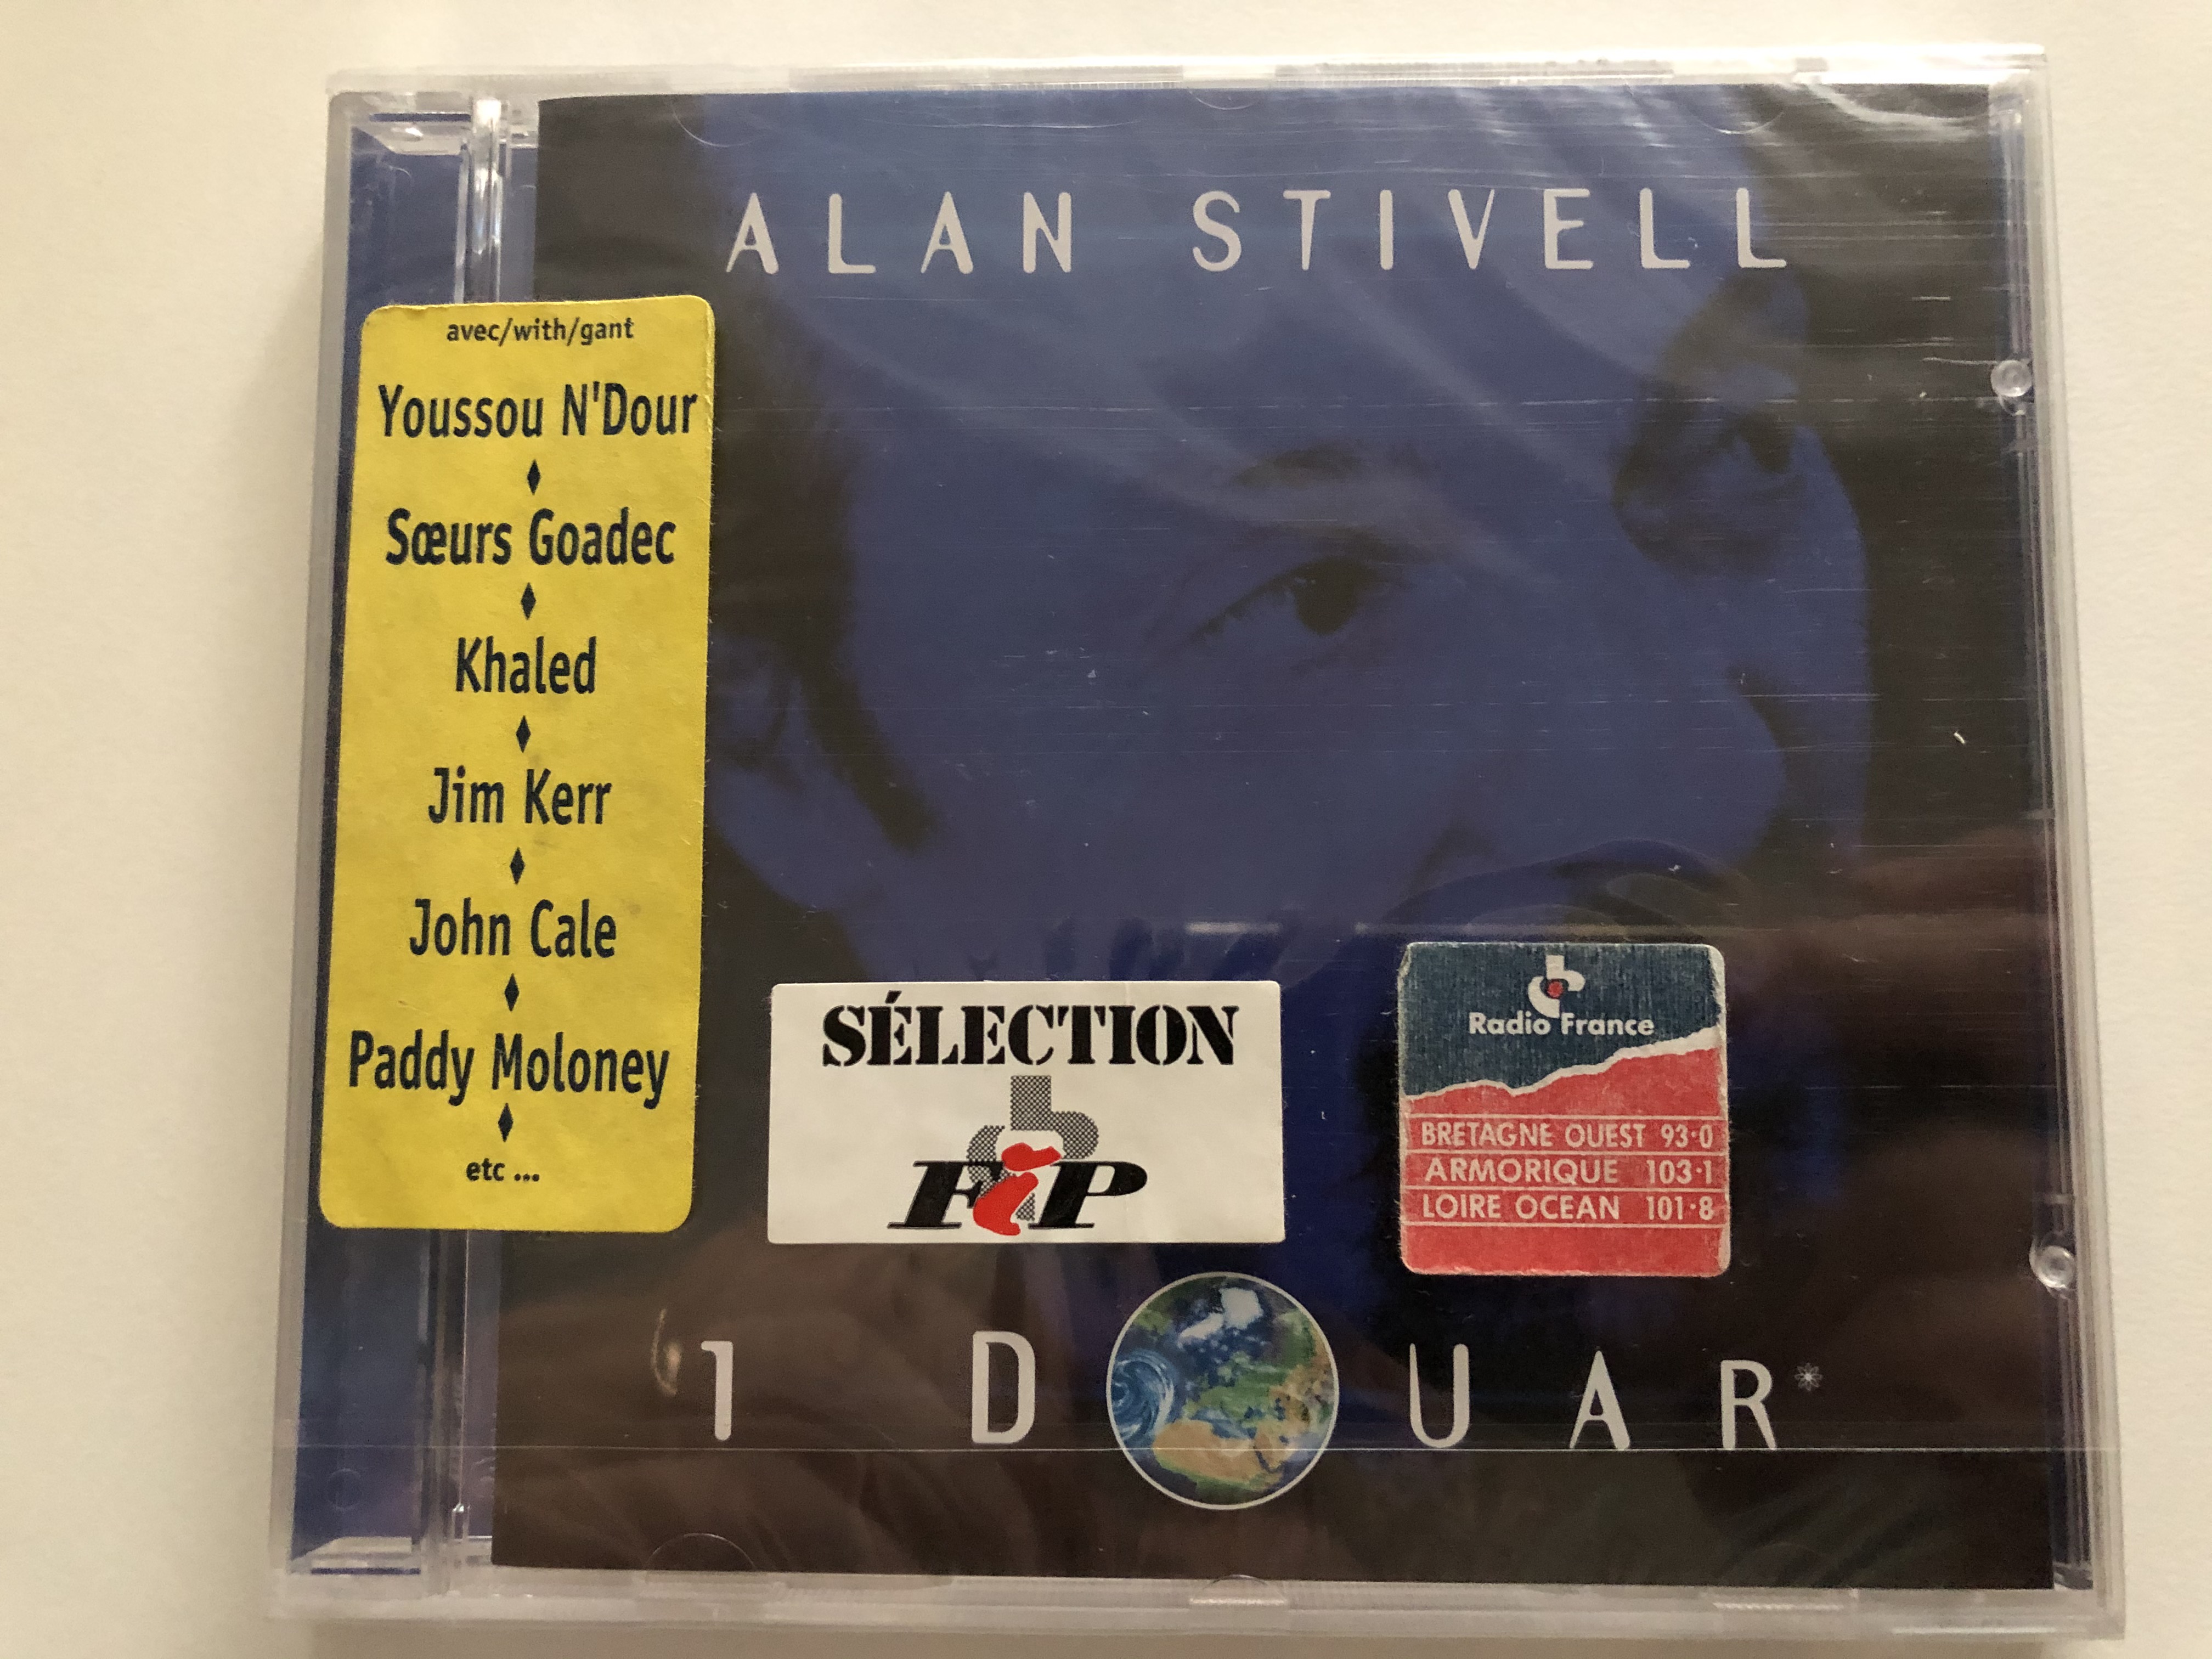 alan-stivell-1-douar-with-youssou-n-dour-s-urs-goadec-khaled-jim-kerr-john-cale-paddy-moloney-...-disques-dreyfus-audio-cd-1998-fdm-36-209-2-1-.jpg